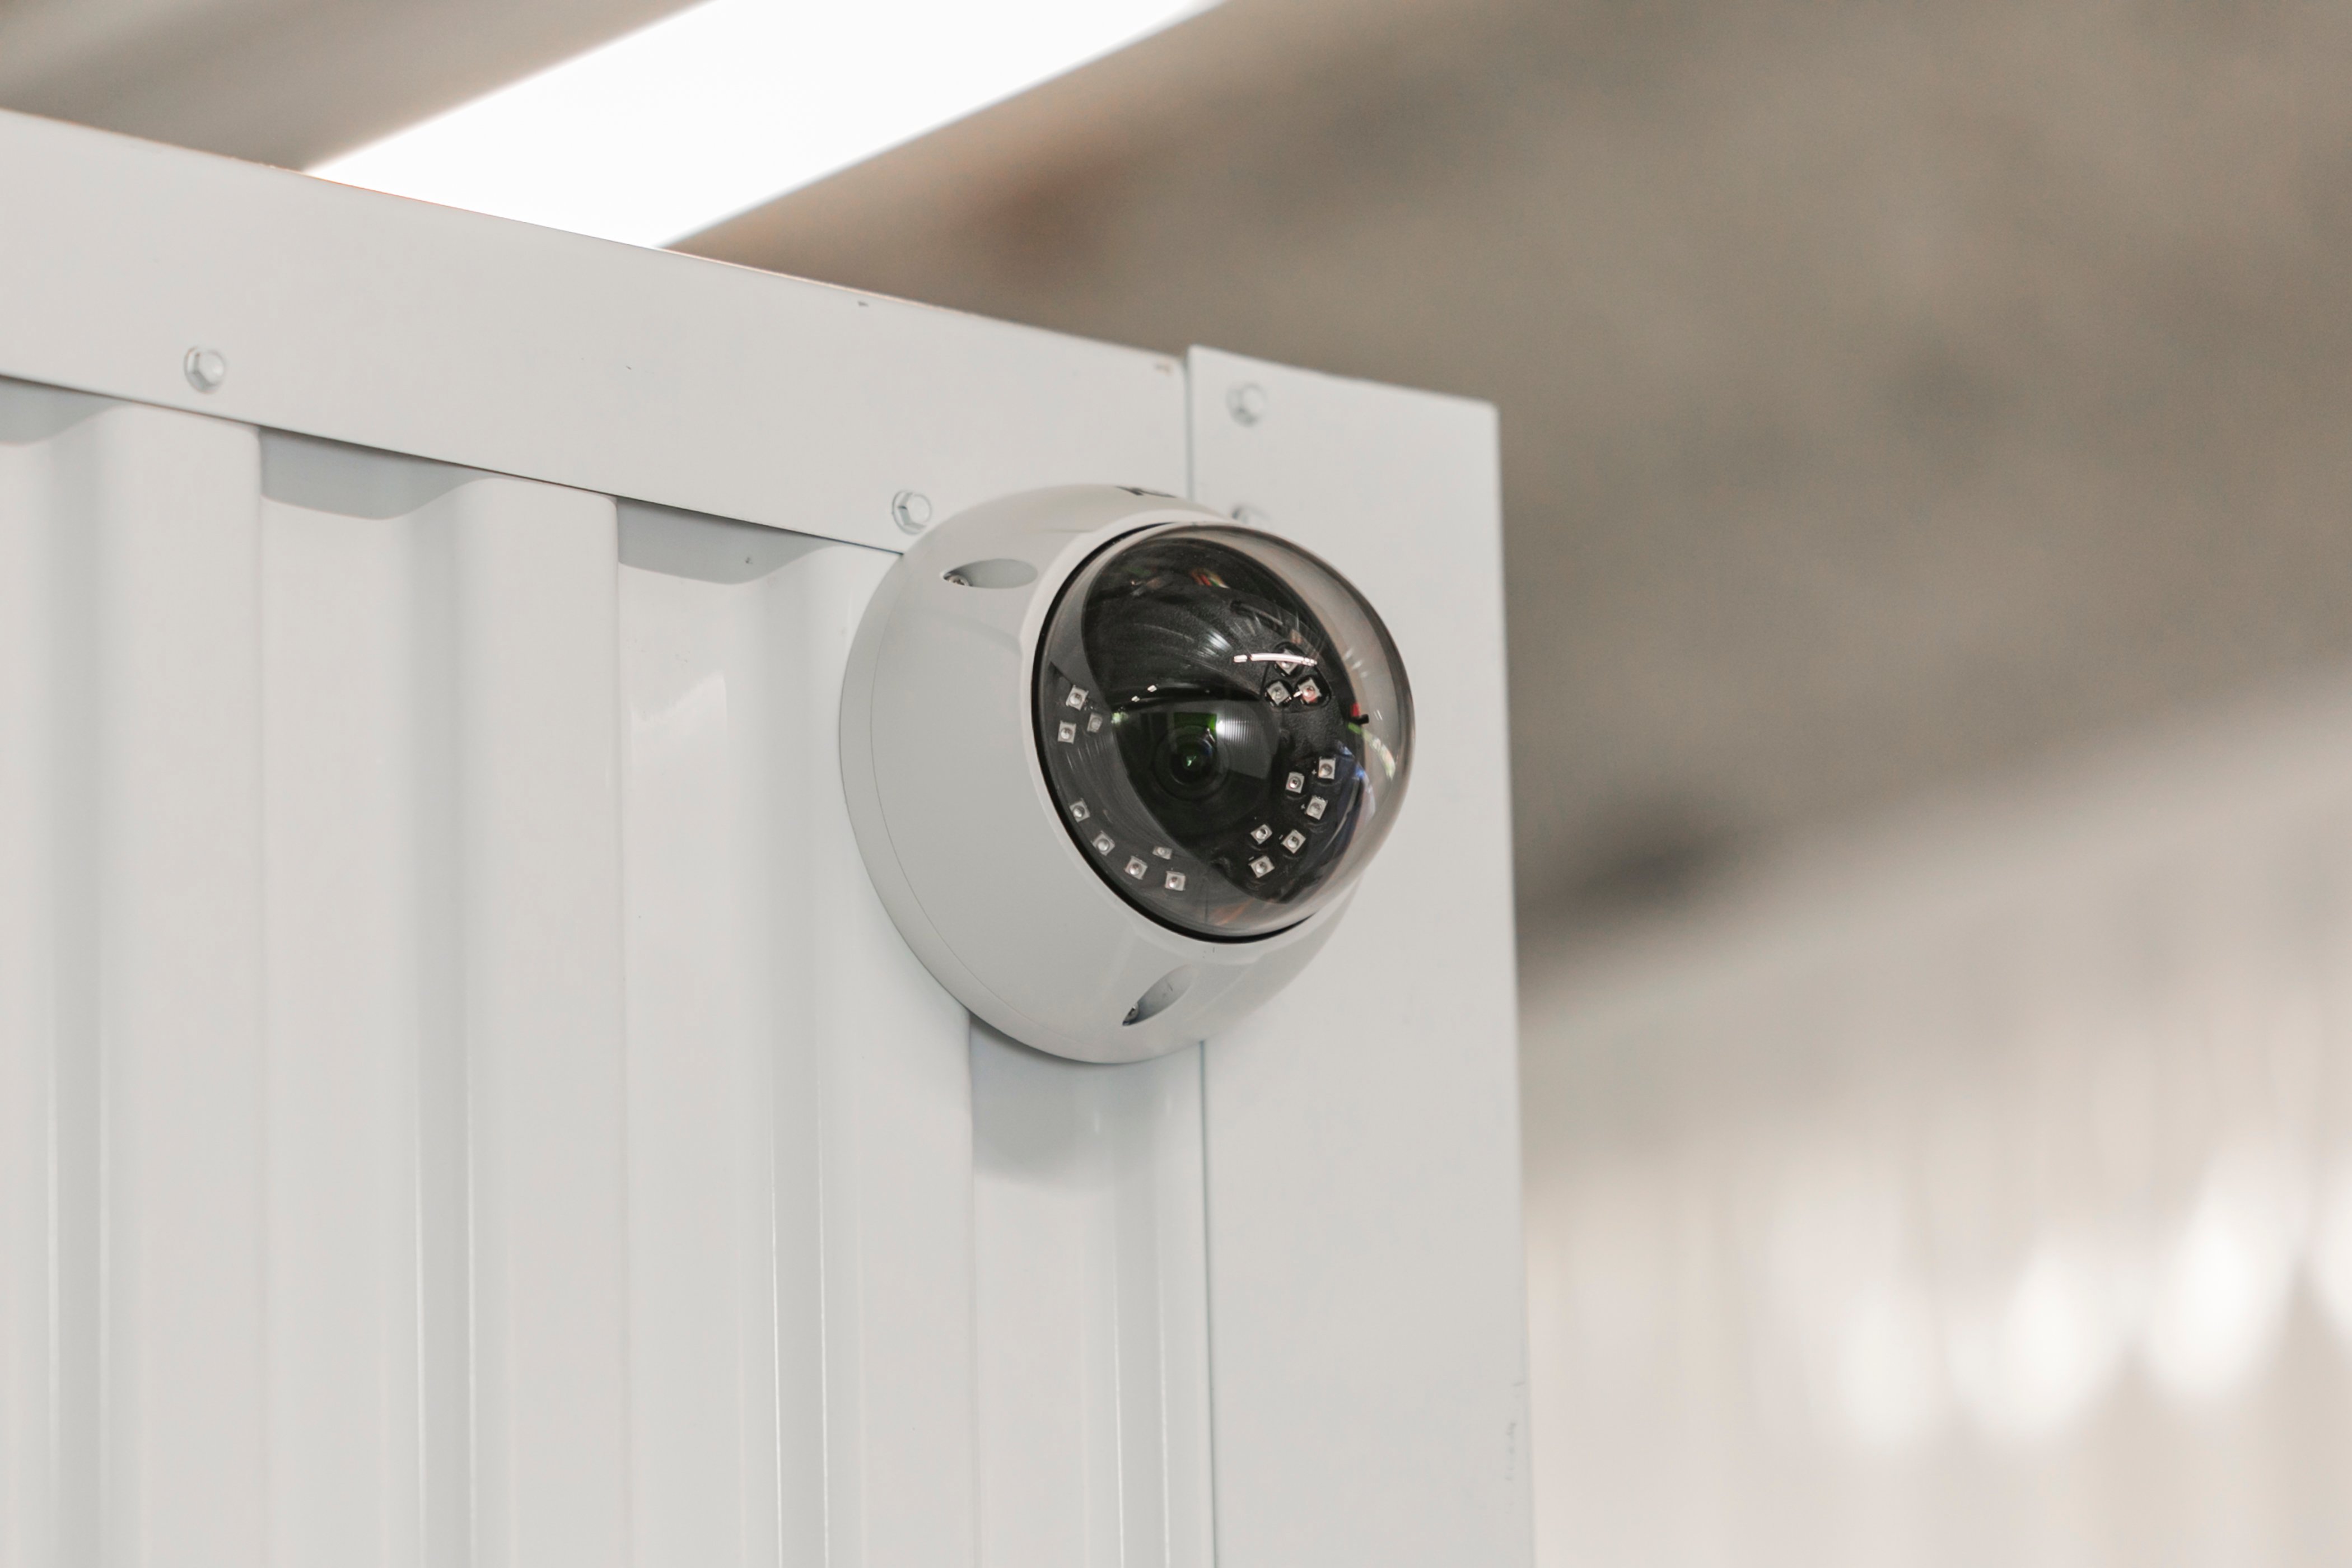 Security Camera at Self-Storage Facility